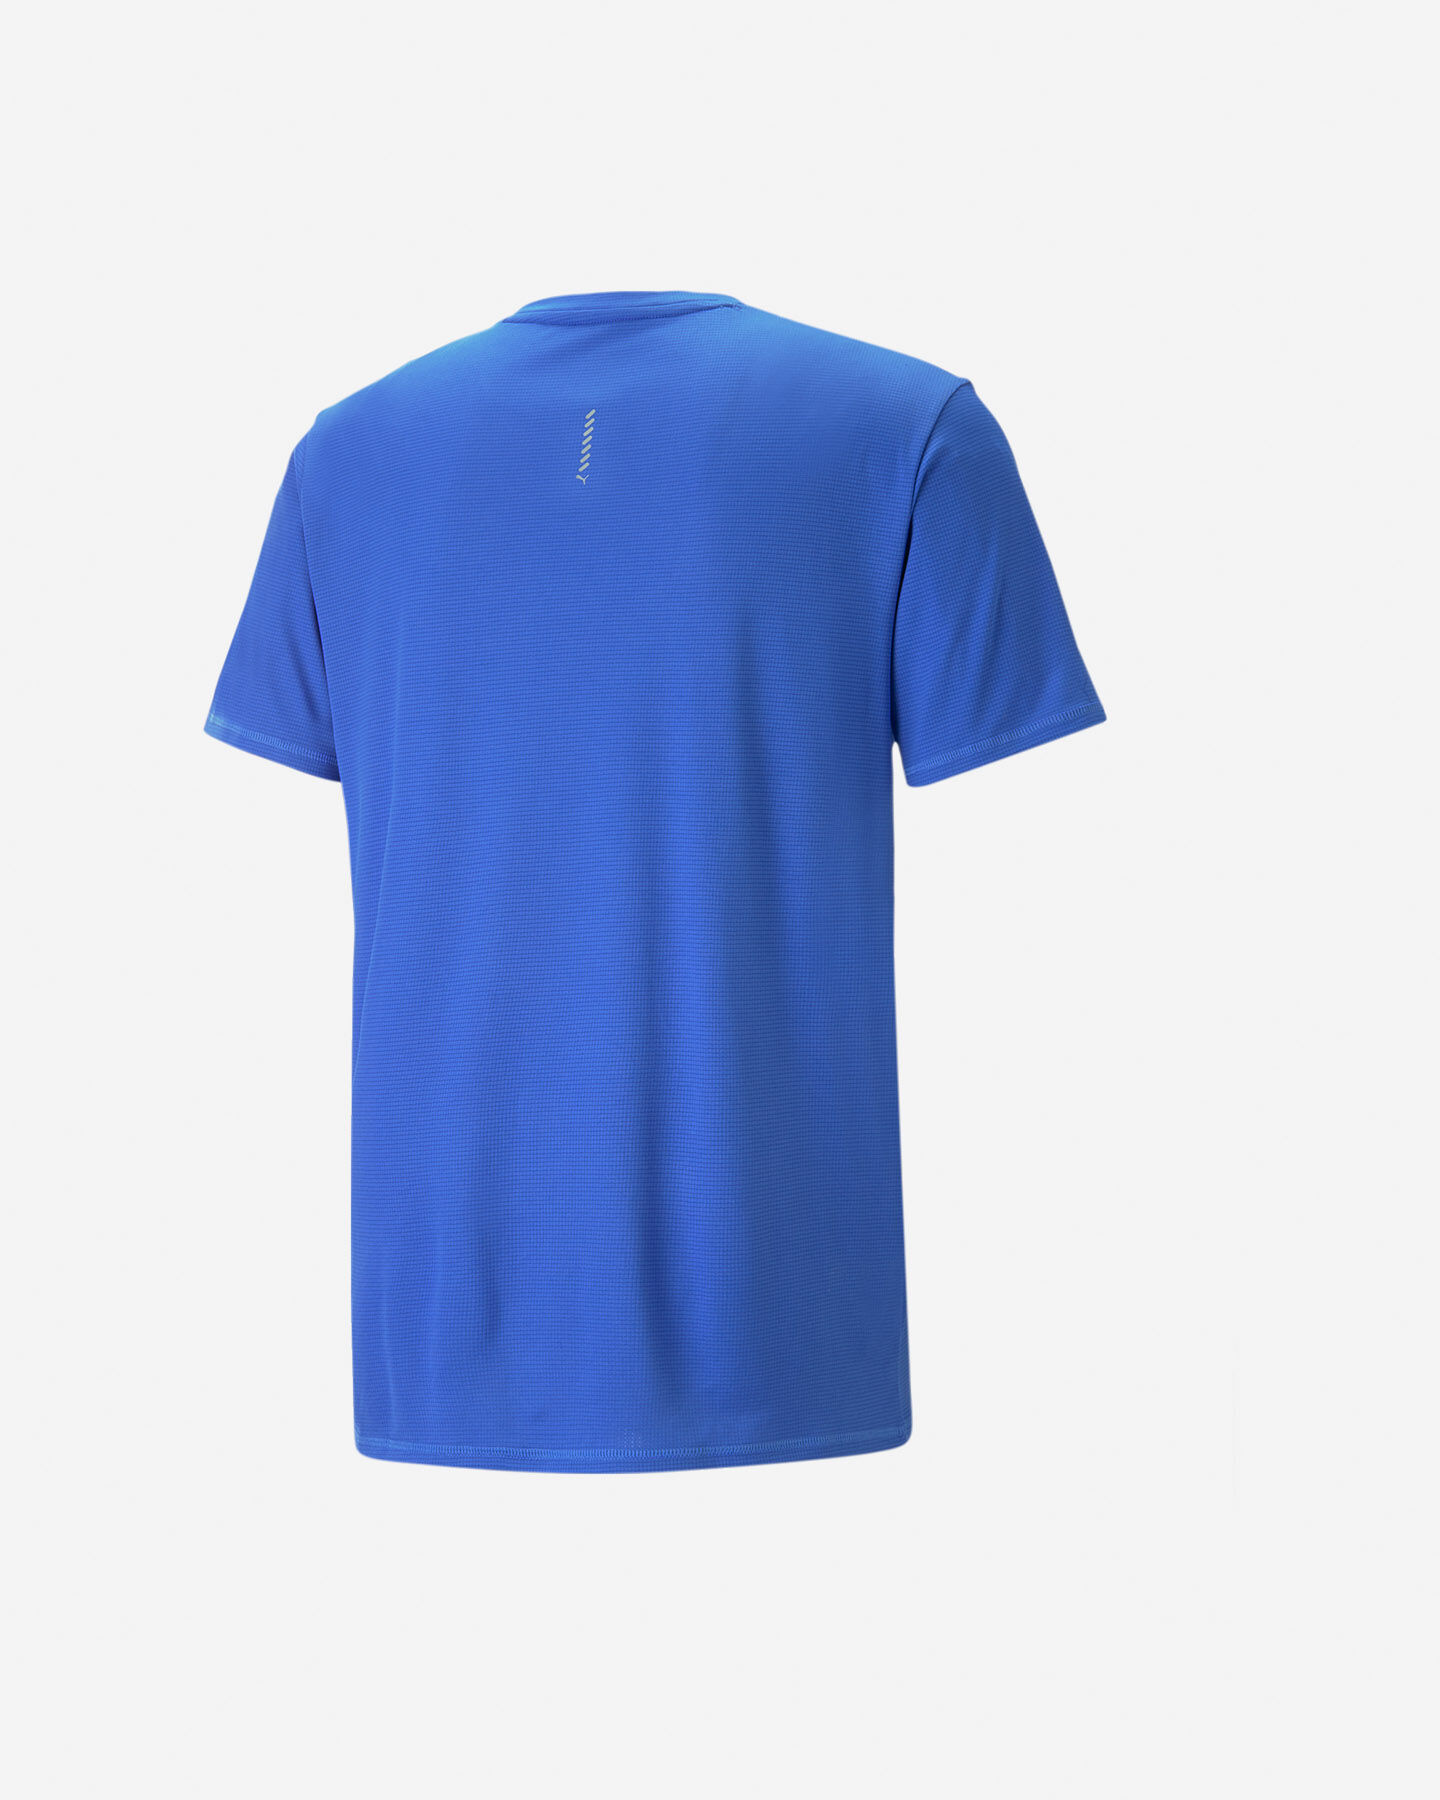  T-Shirt running PUMA FAVORITE LOGO M S5540677|92|M scatto 1